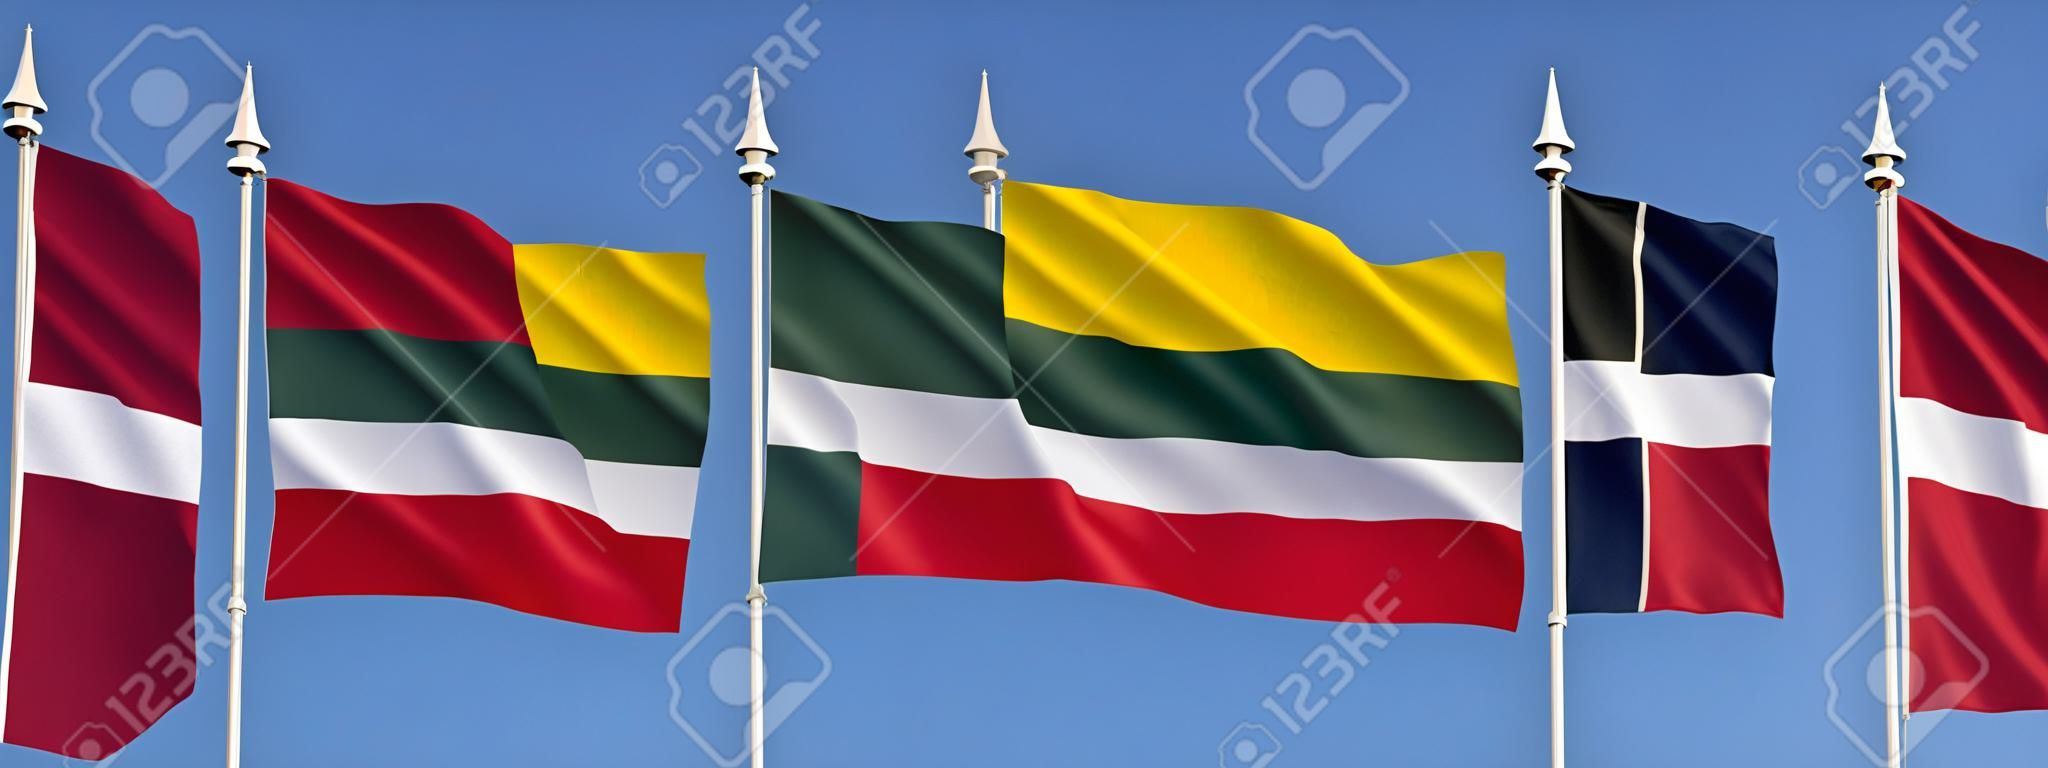 Flags of the Baltic States - Latvia, Lithuania and Estonia.